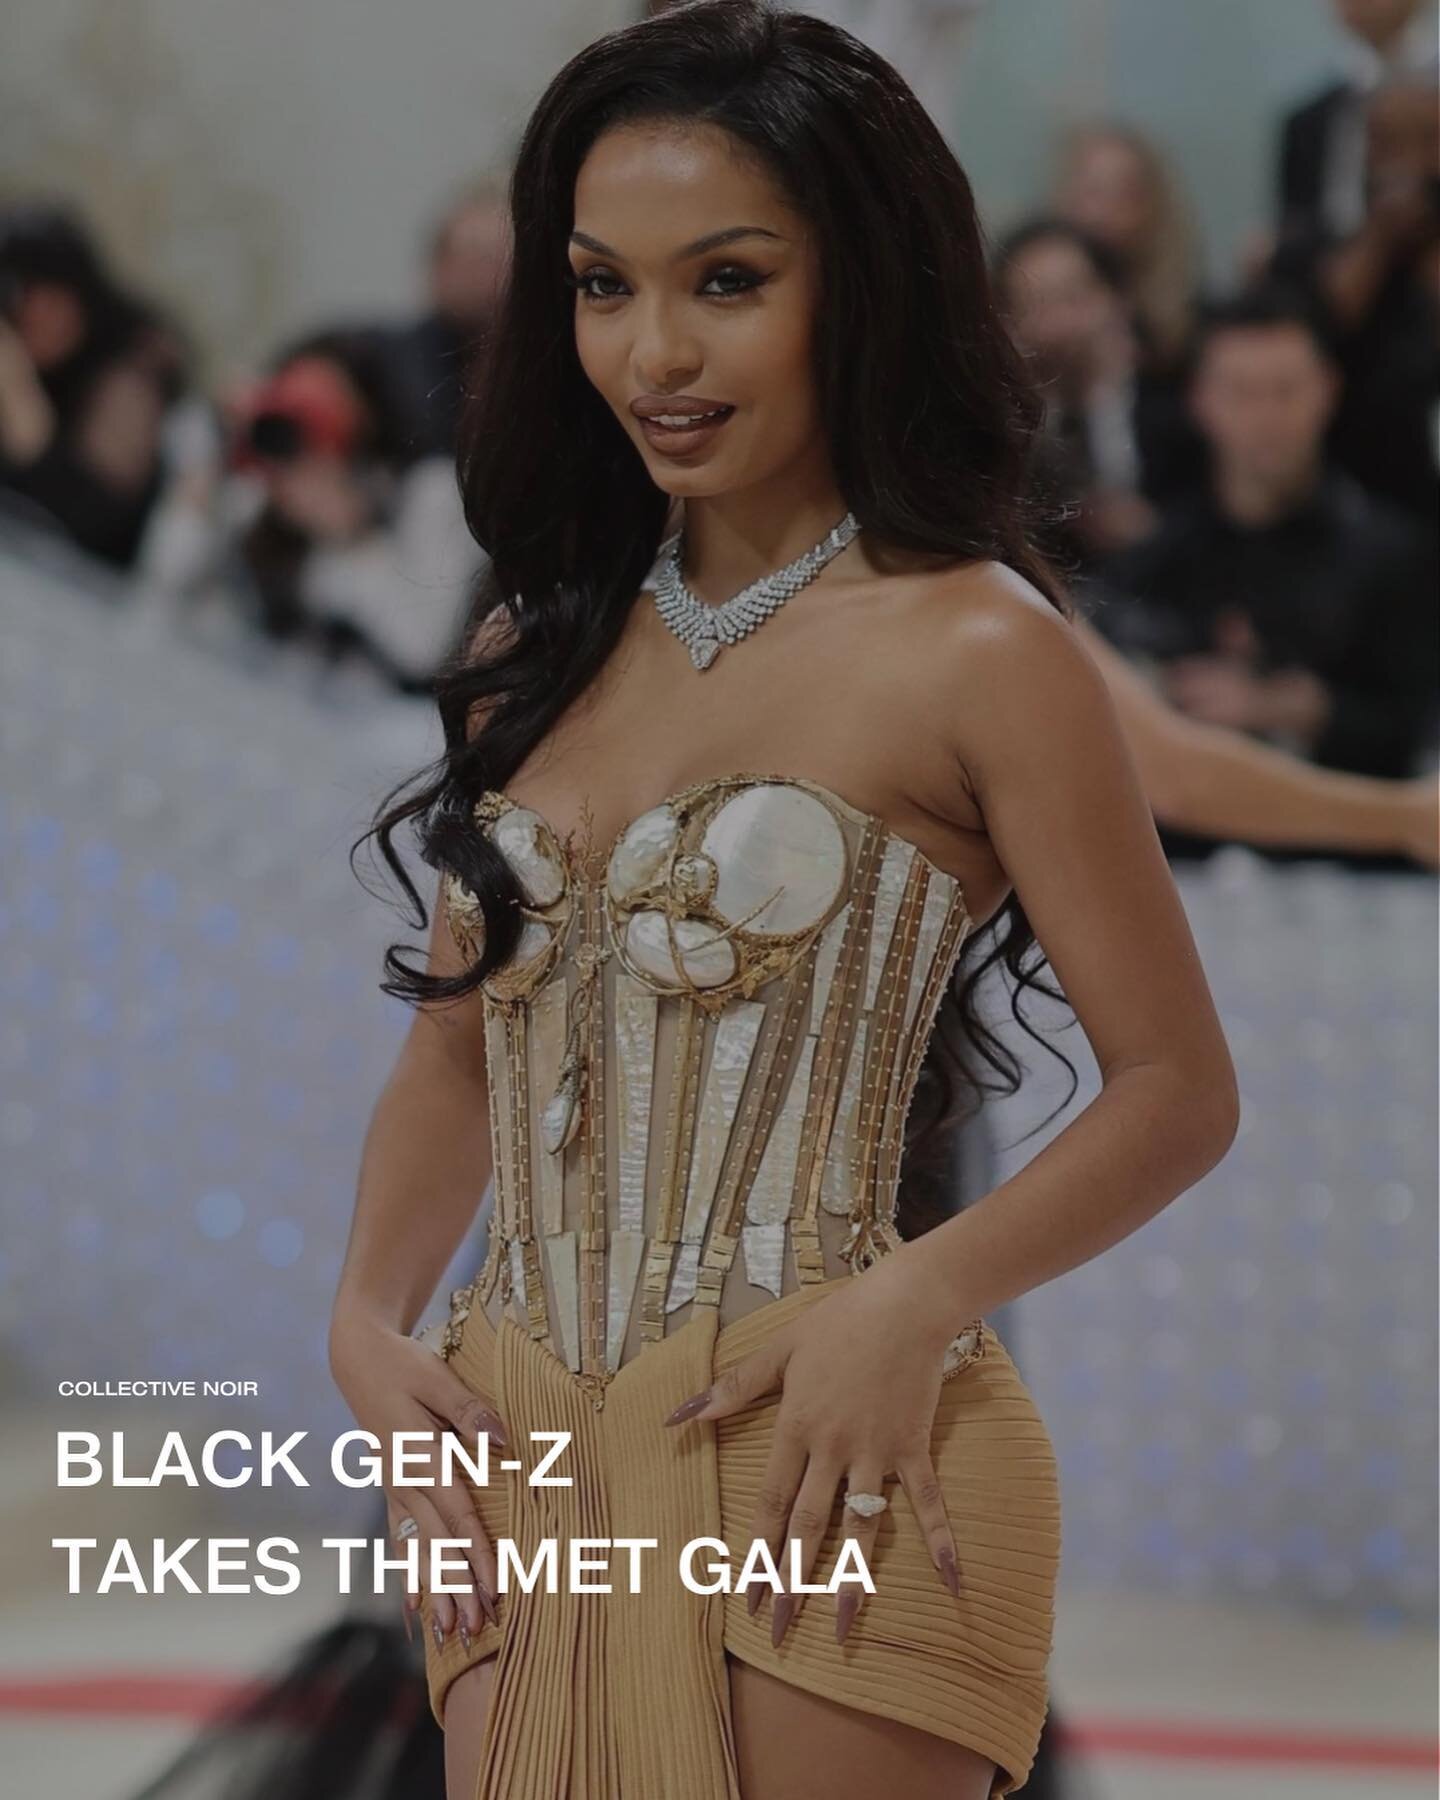 Black Gen Z women showing us how it&rsquo;s done at the Met Gala. 

📸: Getty Images 

#MetGala2023 #BlackGenZ #blackexcellence